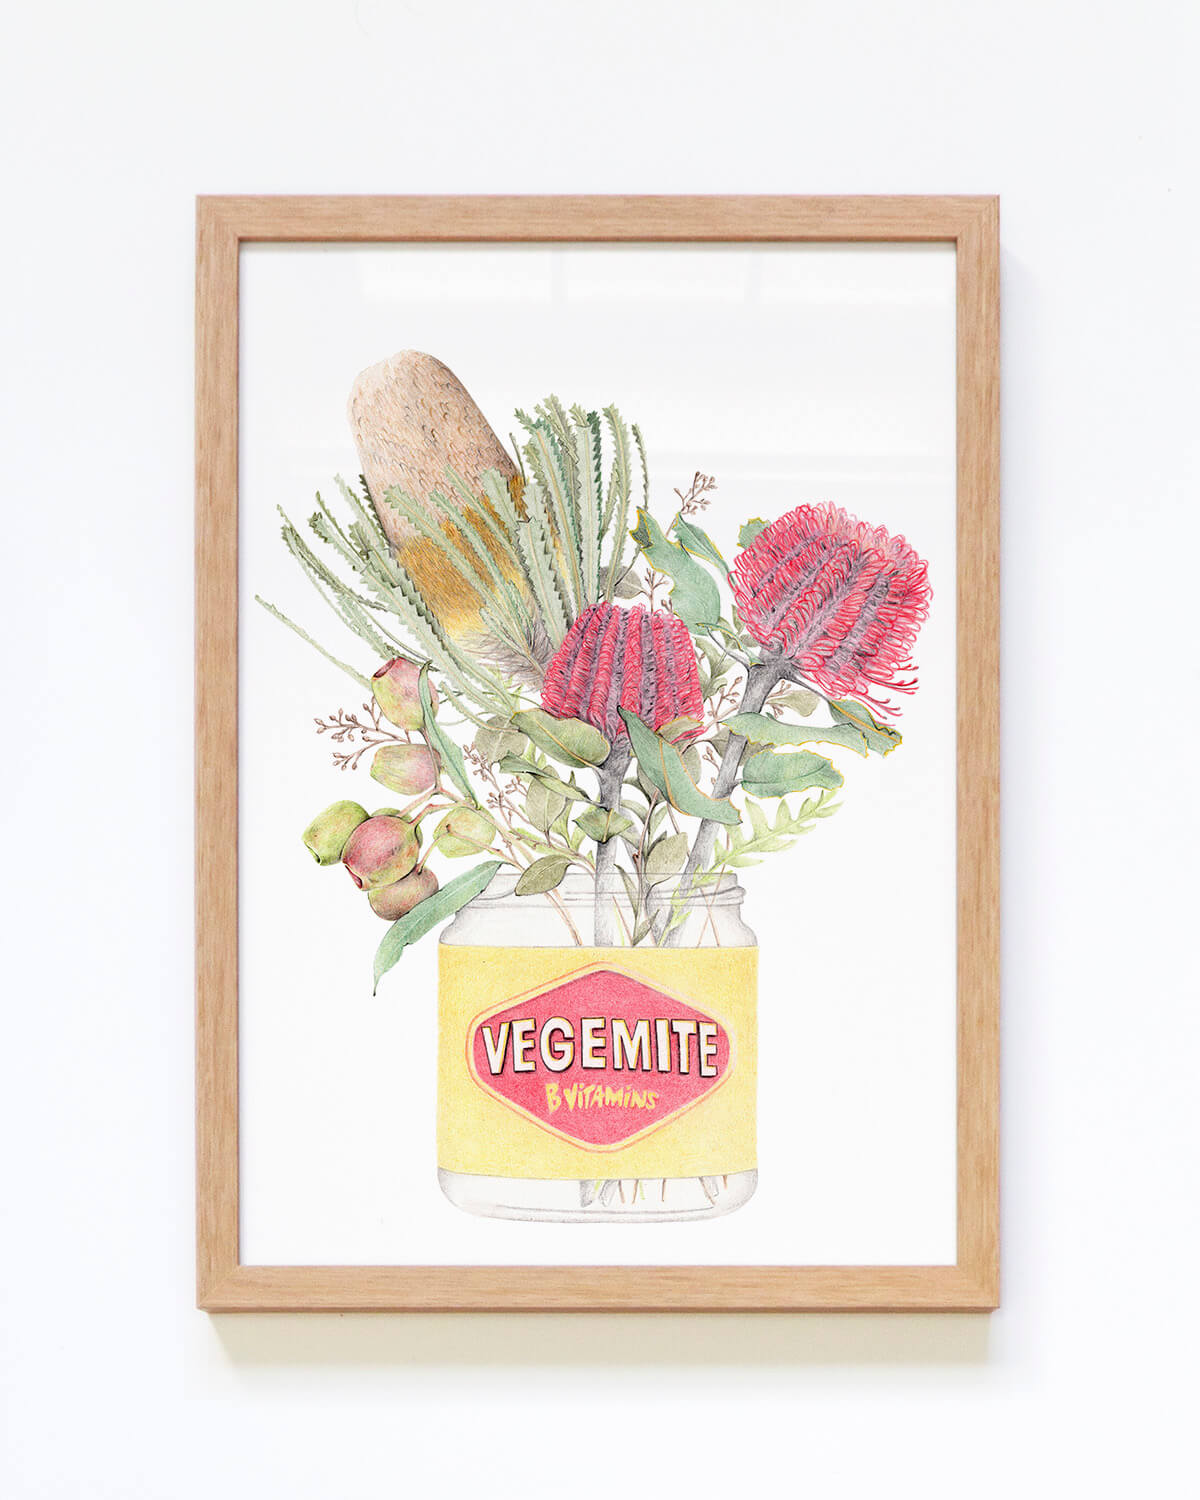 Vegemite with native floral framed art print